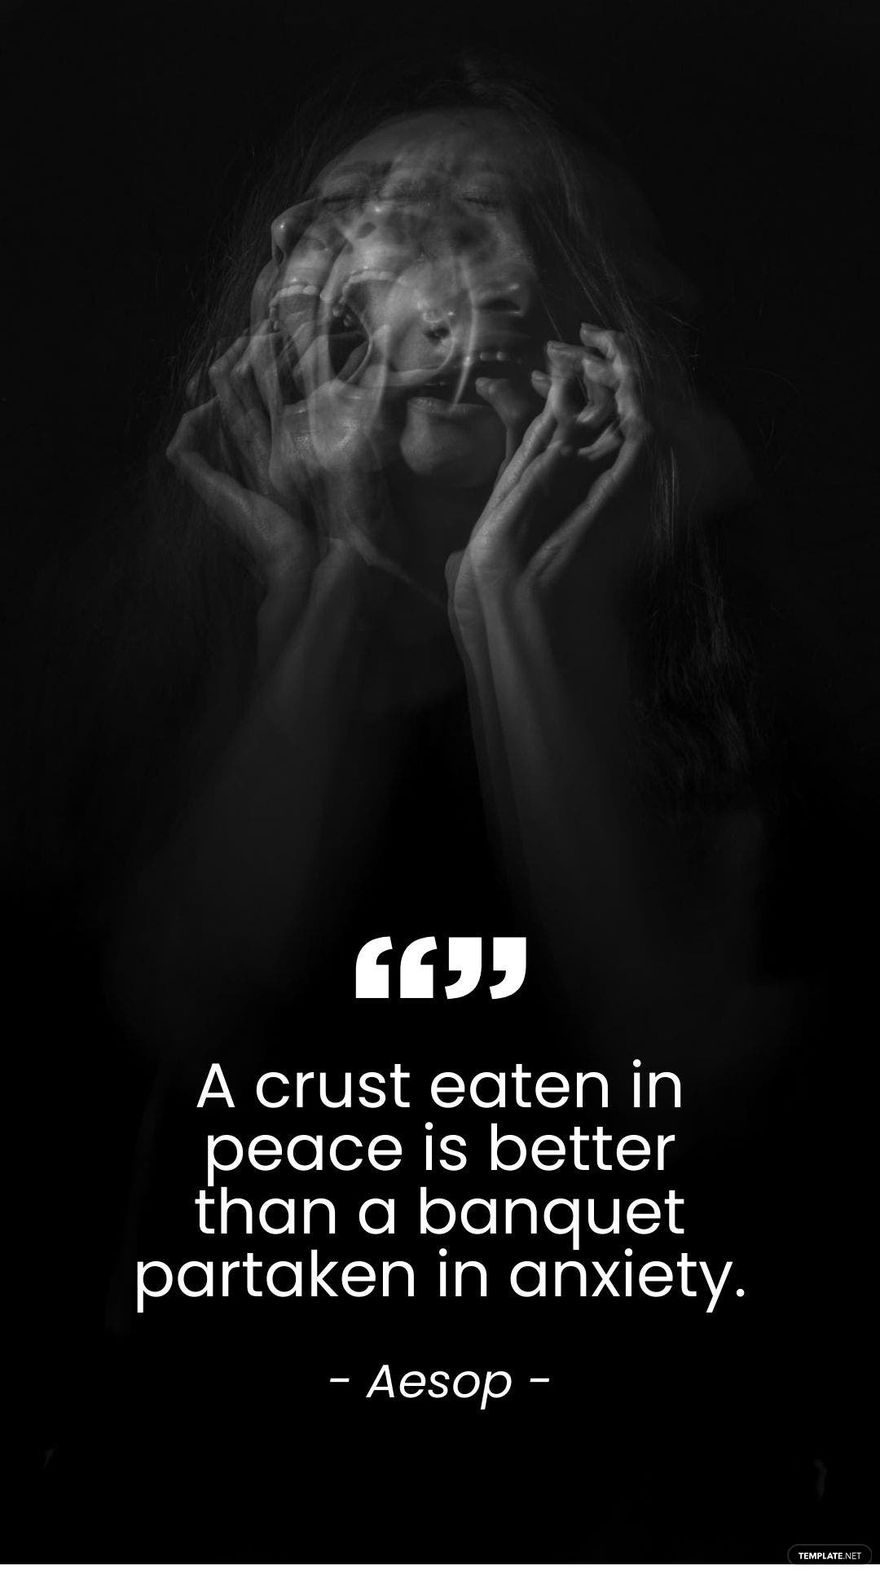 Free Aesop - A crust eaten in peace is better than a banquet partaken in anxiety. in JPG